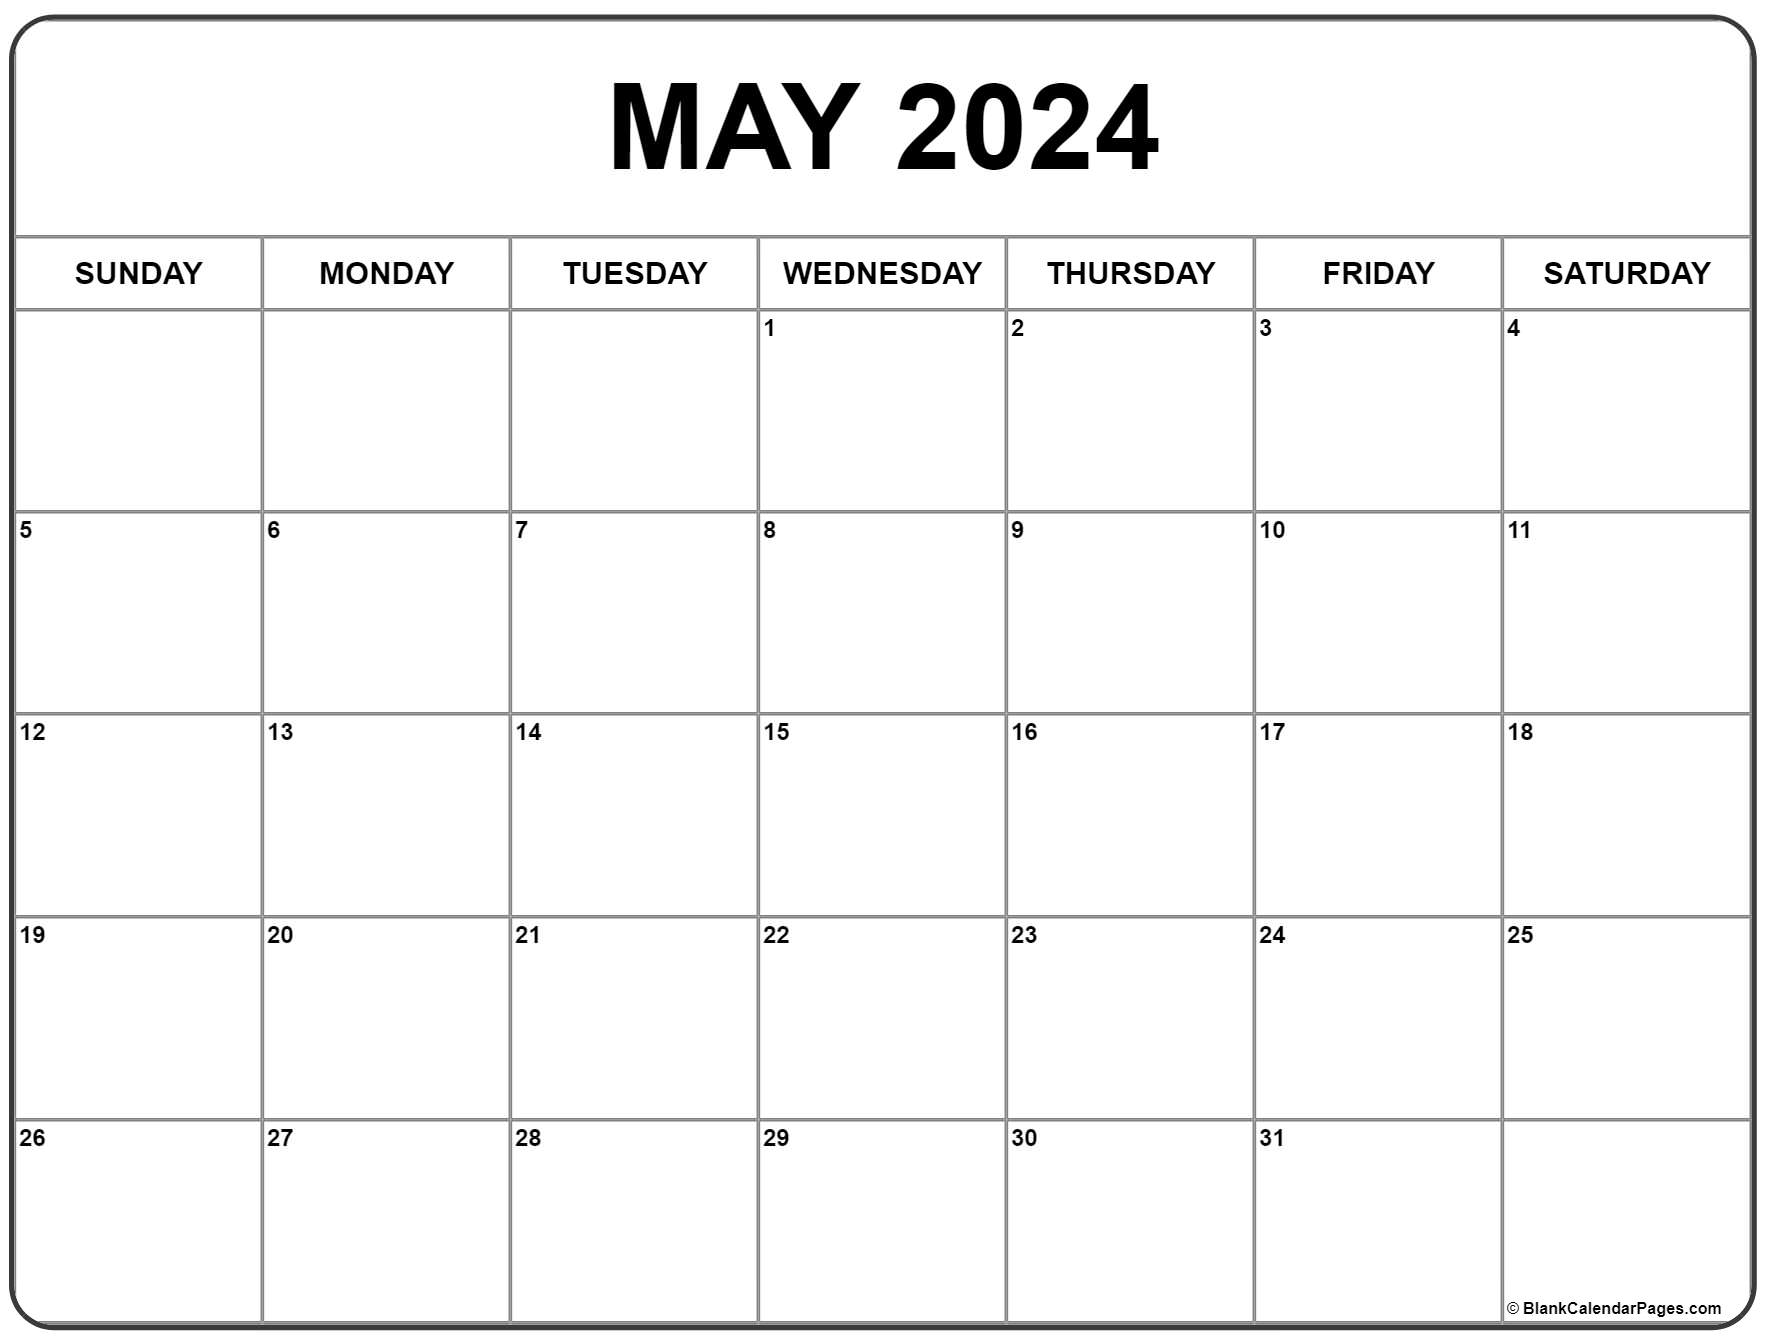 May 2024 Calendar | Free Printable Calendar for 2024 May Calendar Printable